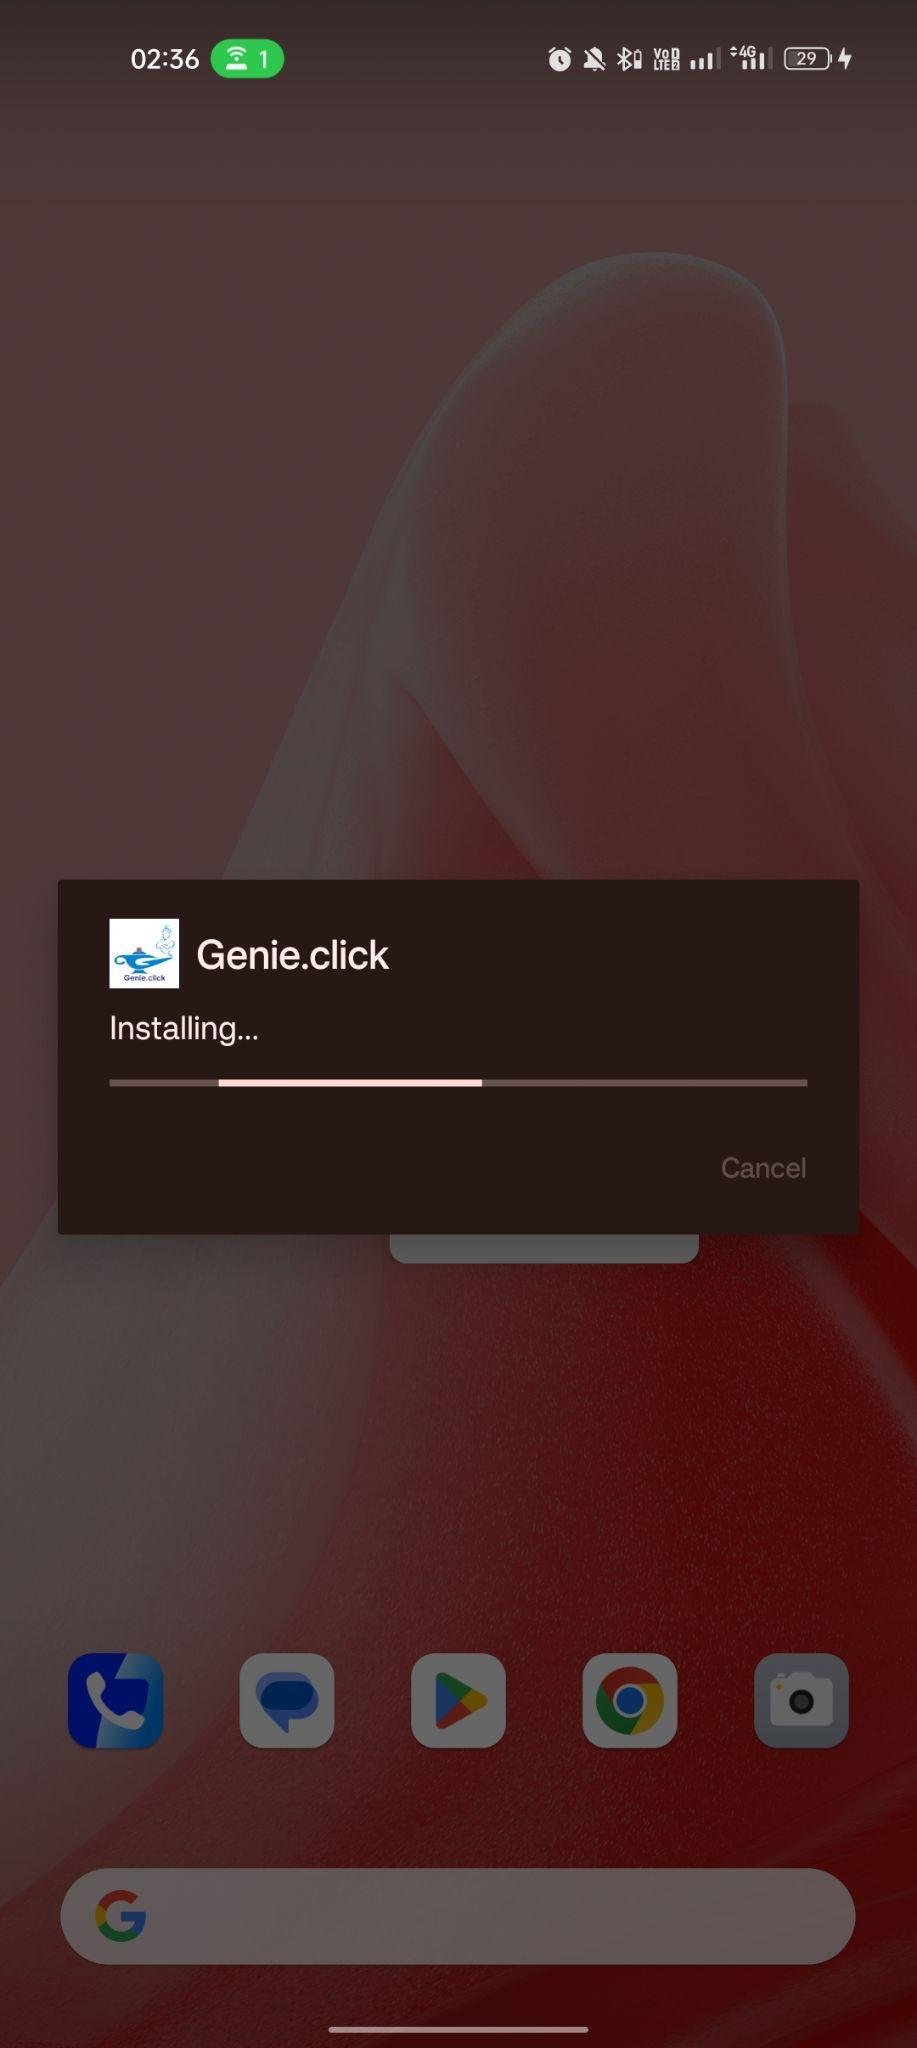 Genie.click apk installing